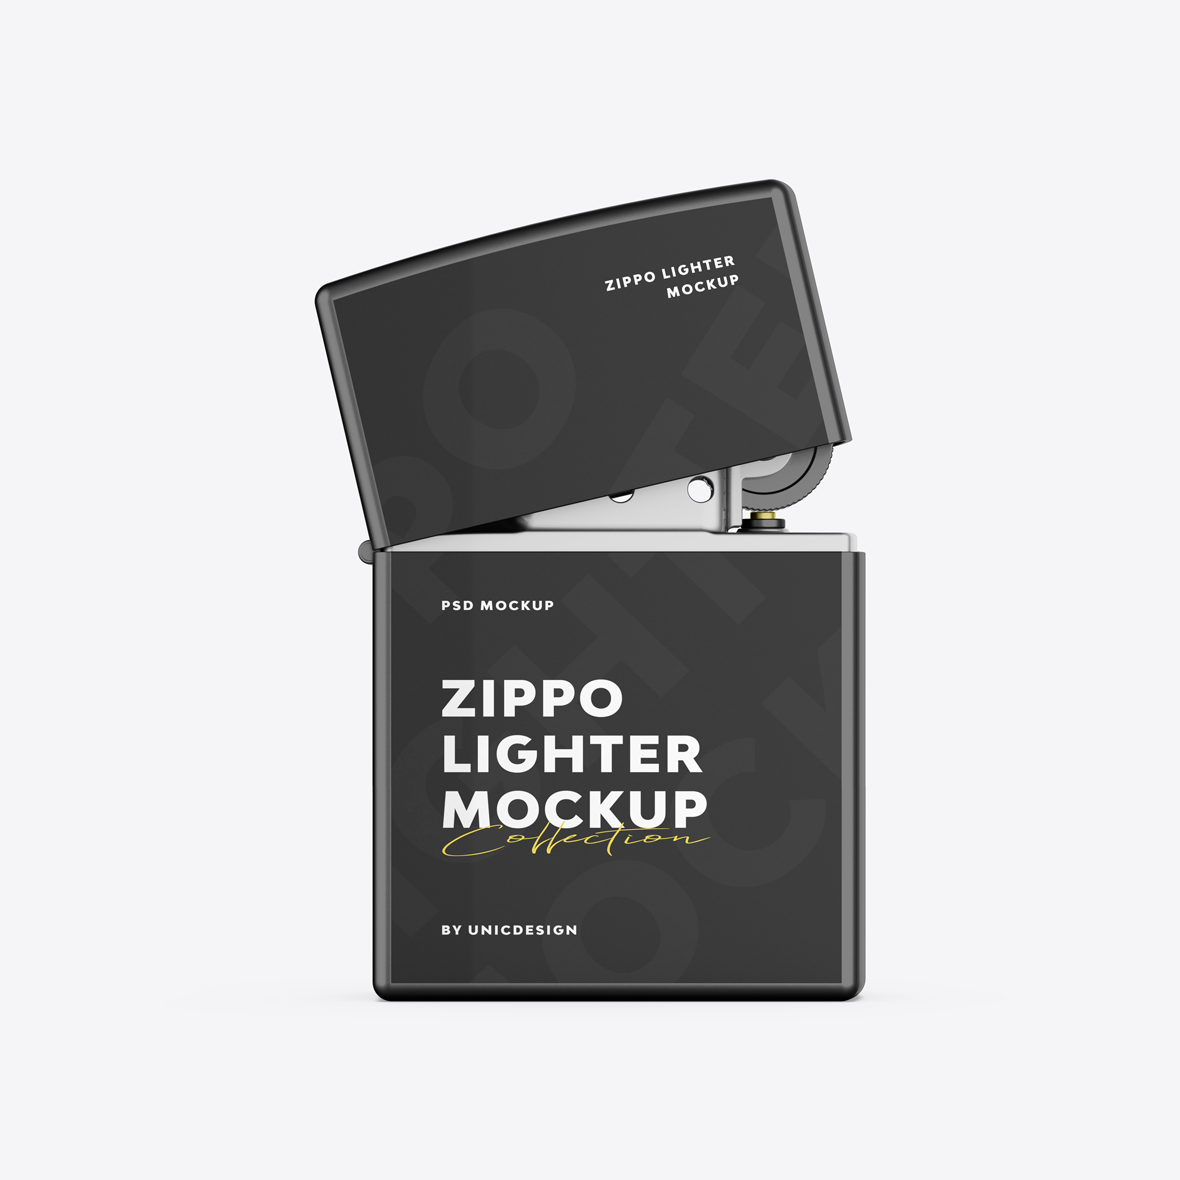 Zippo Lighter Mockup